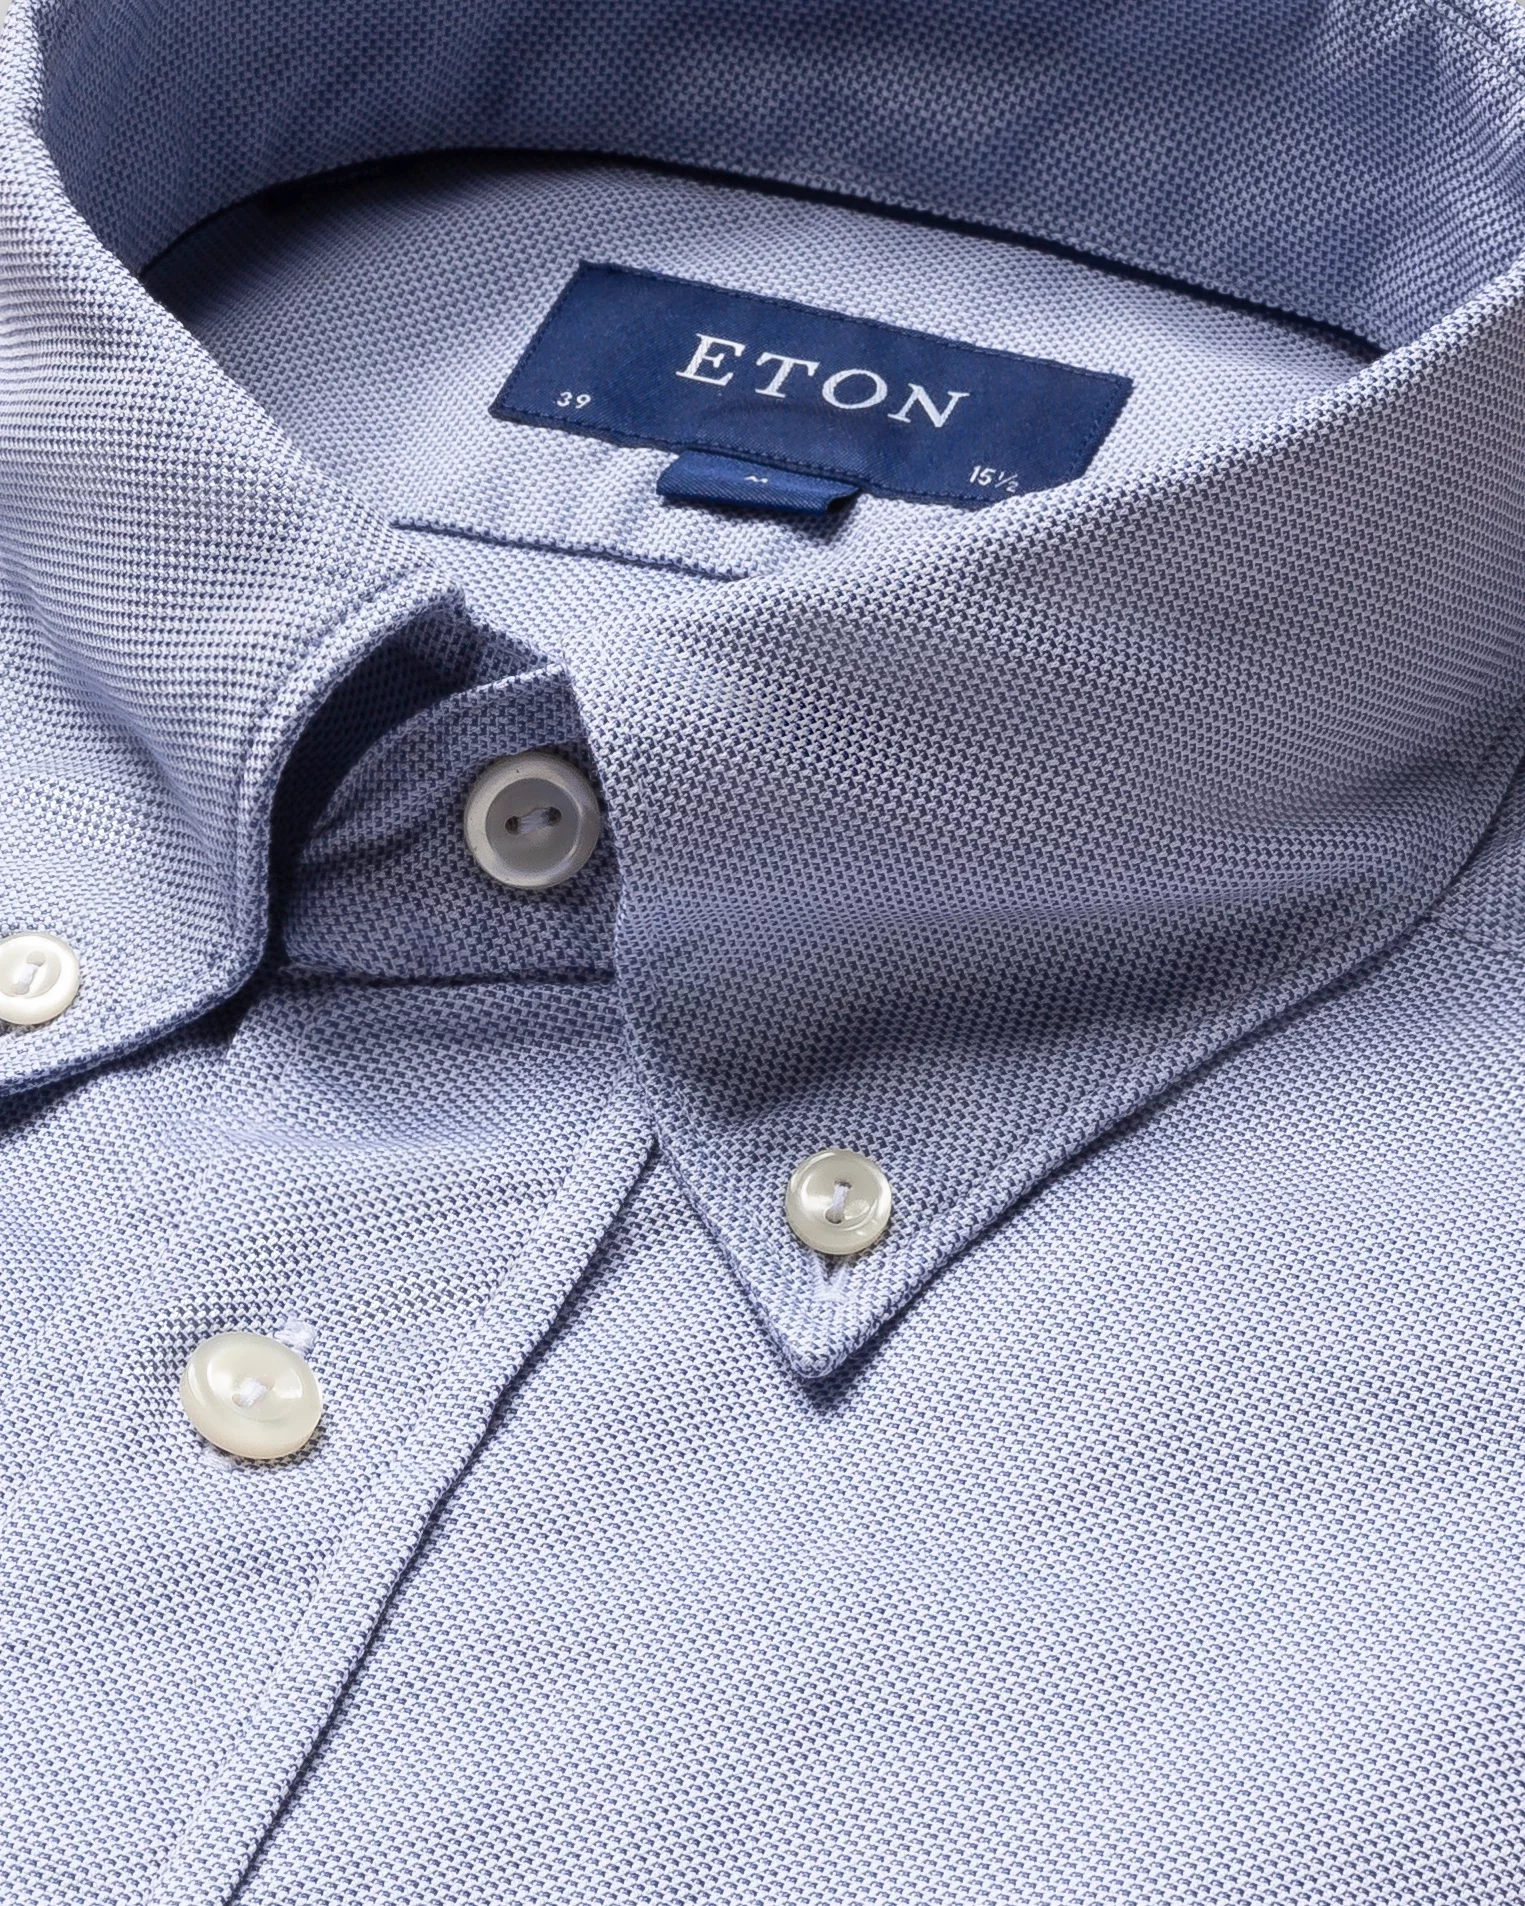 Eton - blue oxford shirt